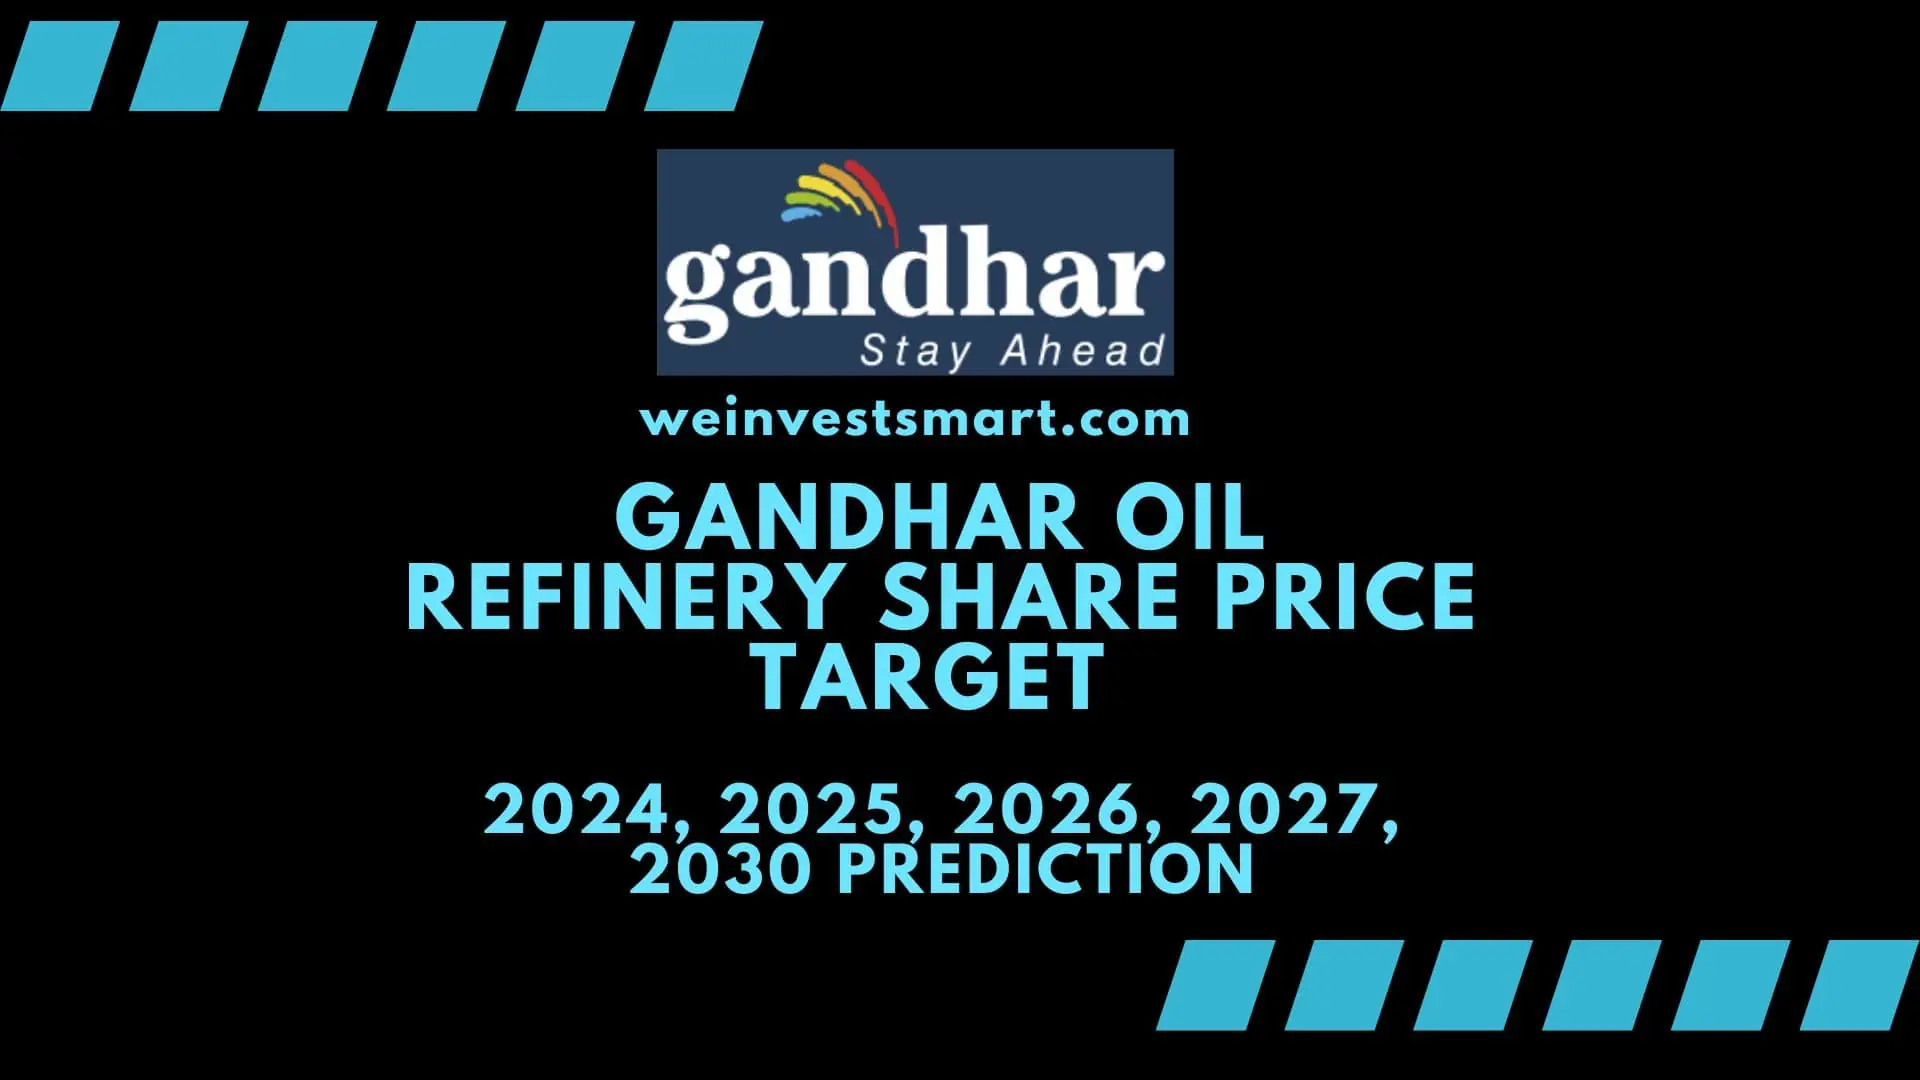 Gandhar Oil Refinery share price target 2024, 2025, 2026, 2027, 2030 prediction